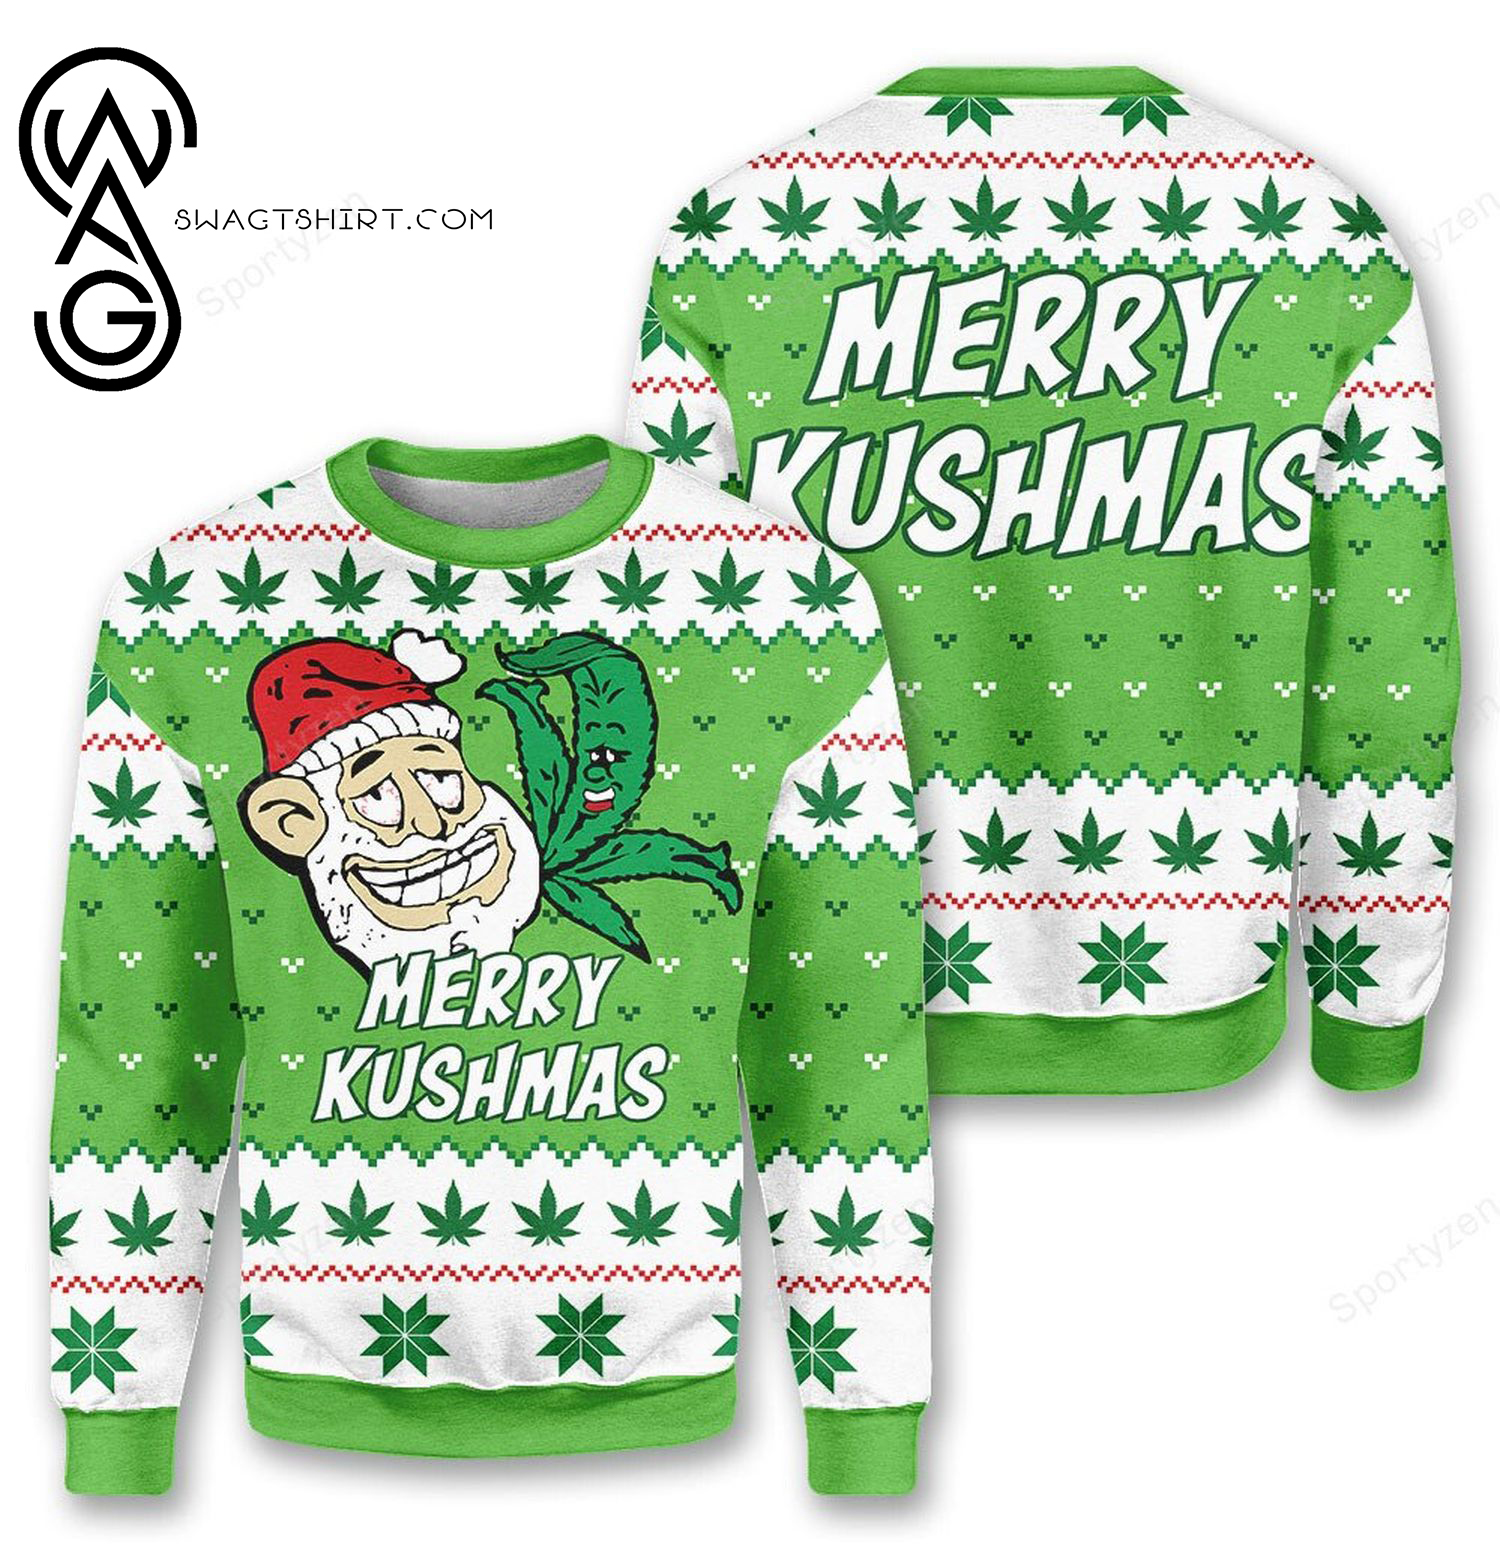 Merry Kushmas Santa Full Print Ugly Christmas Sweater